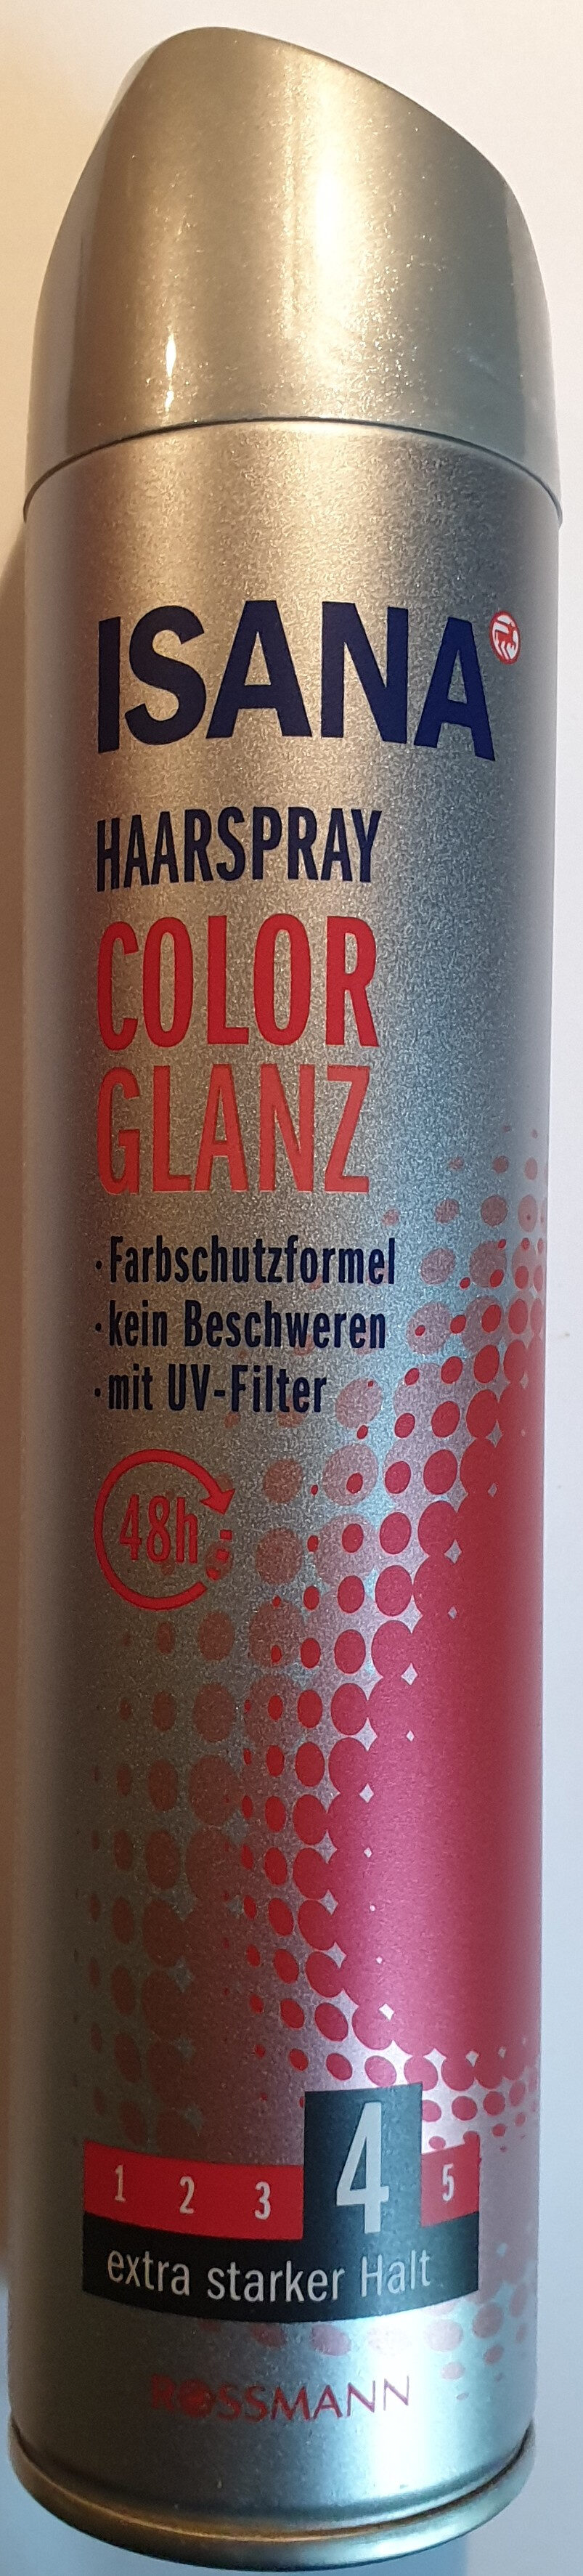 Haarspray Color Glanz, 4 extra starker Halt - Produkt - de